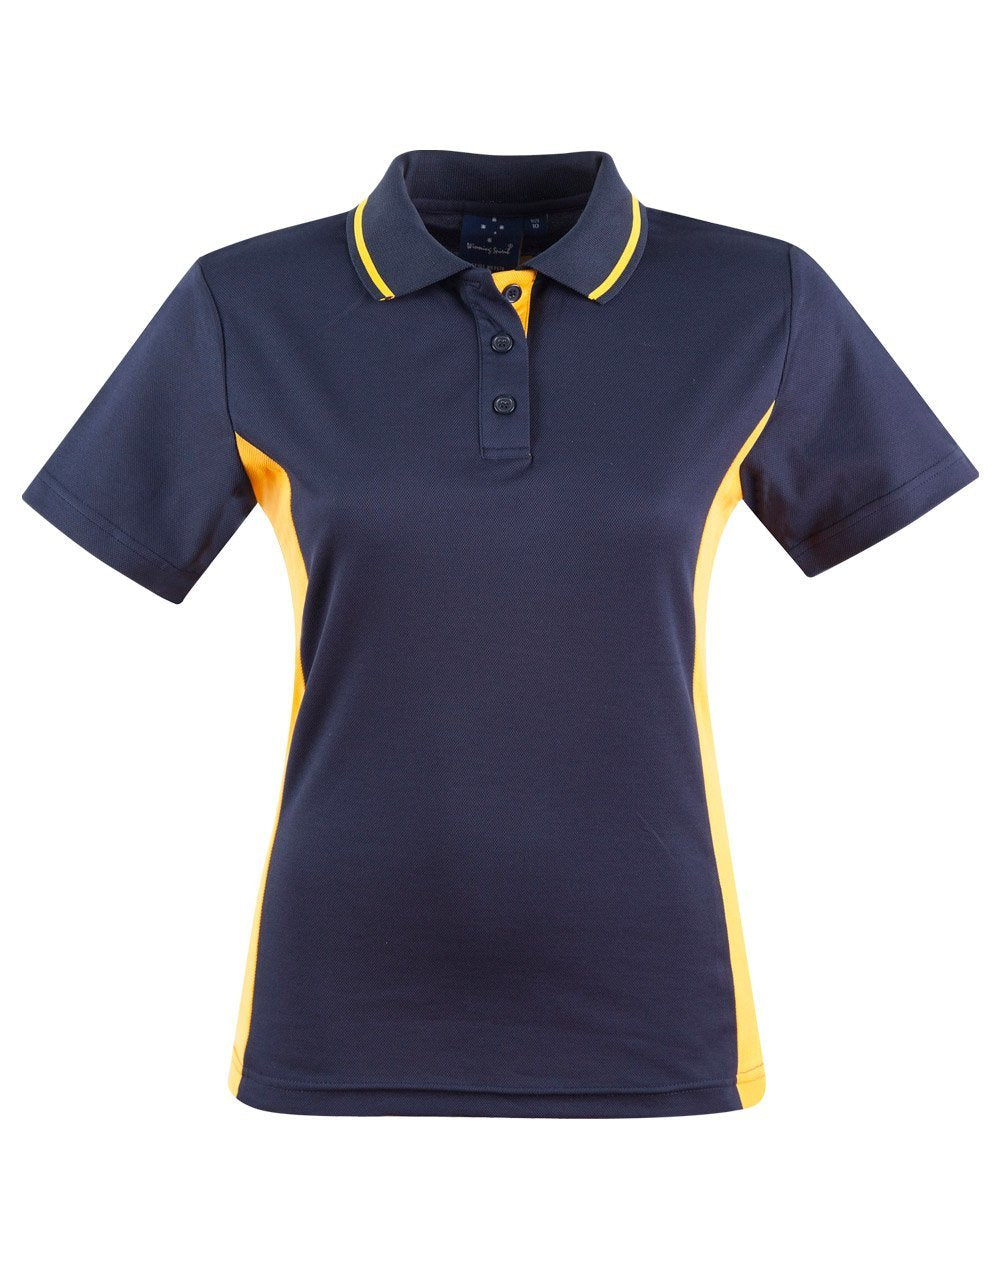 Teammate Polo Shirt Ladies  PS74 Casual Wear Winning Spirit 8 Navy/Gold 